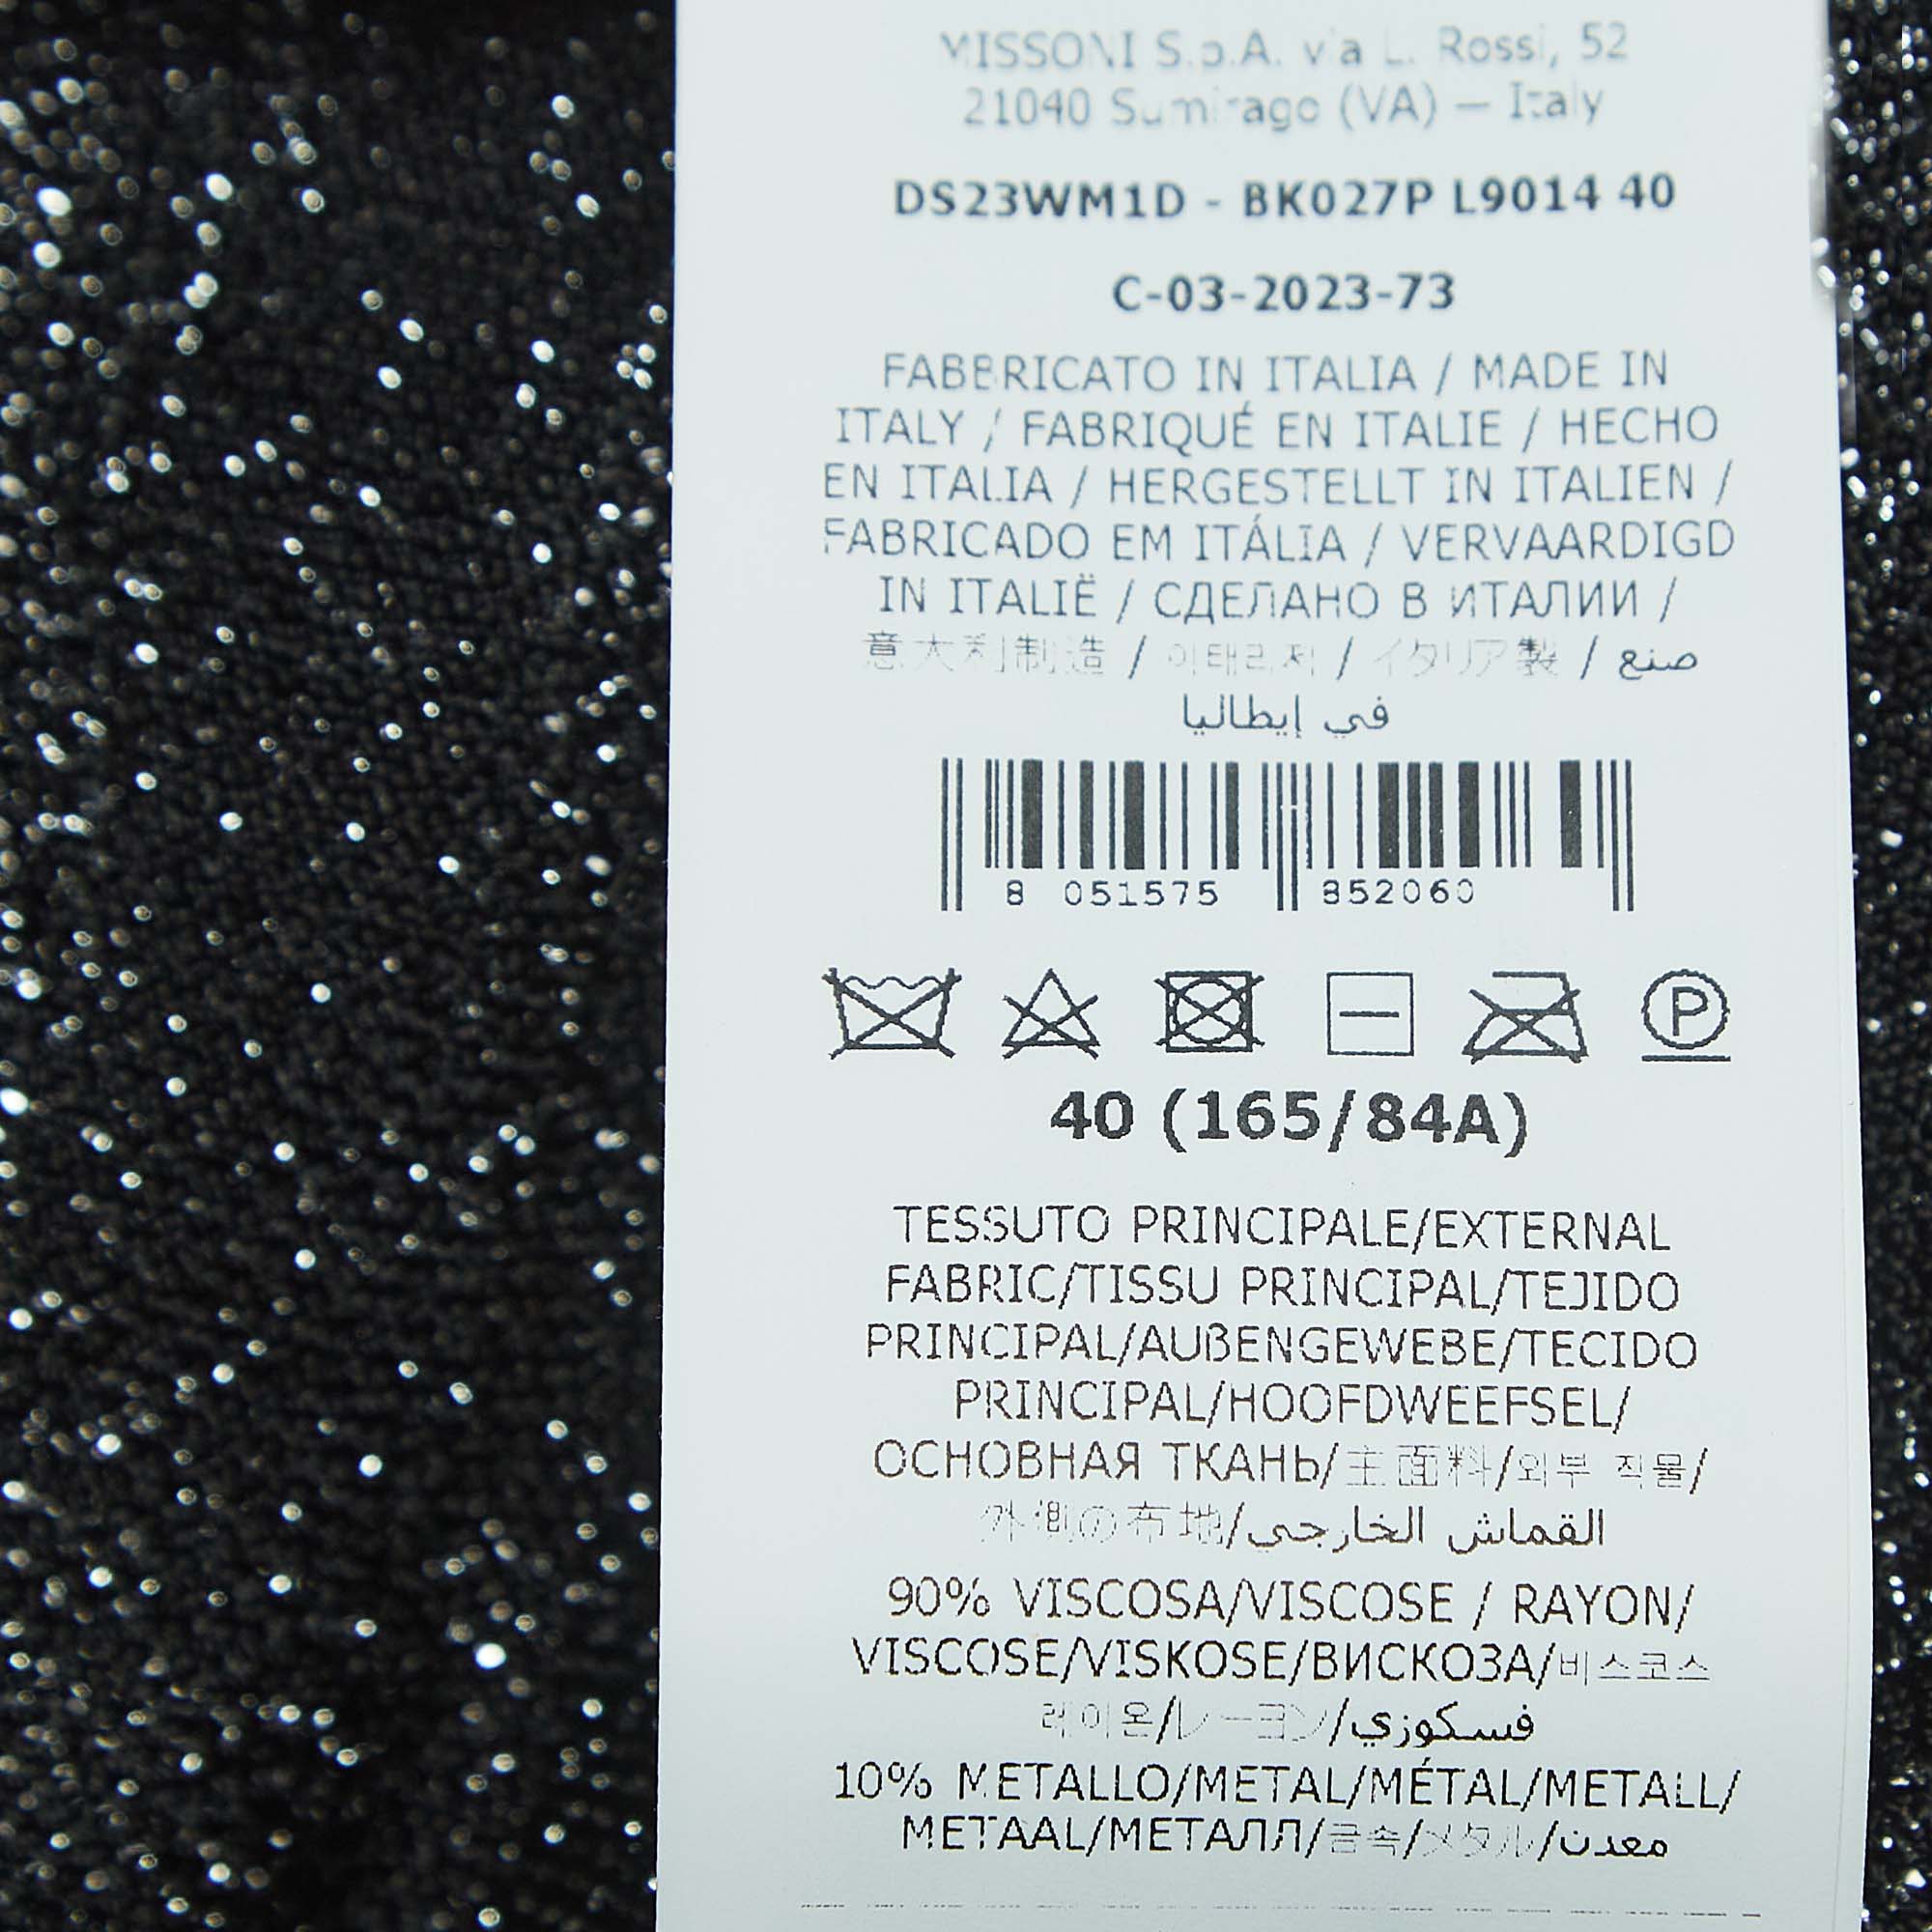 Missoni Black Patterned Lurex Knit Cardigan S